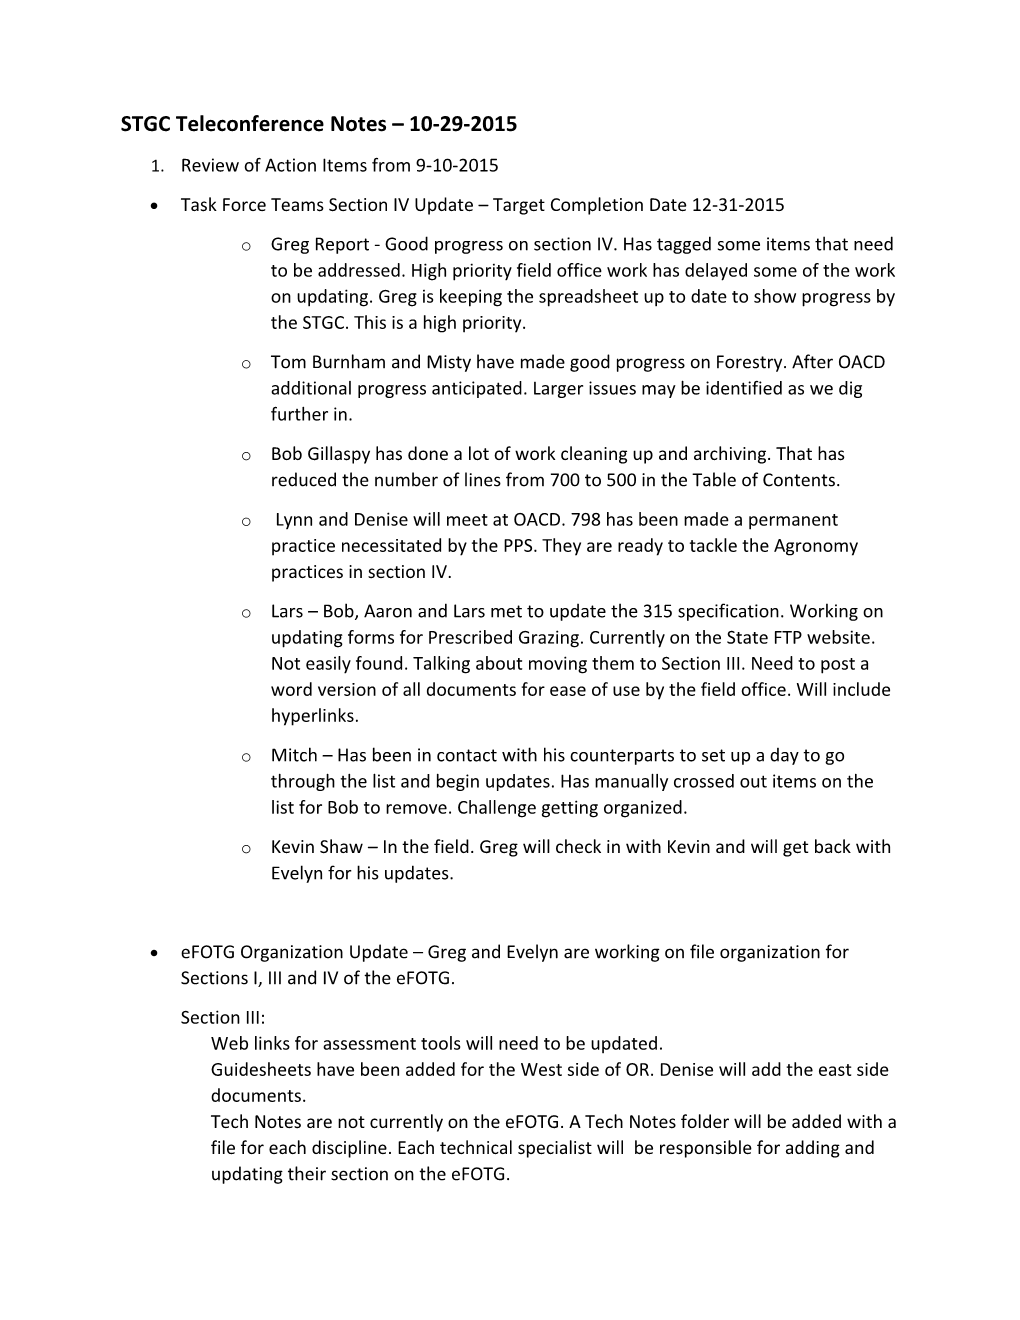 STGC Teleconference Notes 10-29-2015